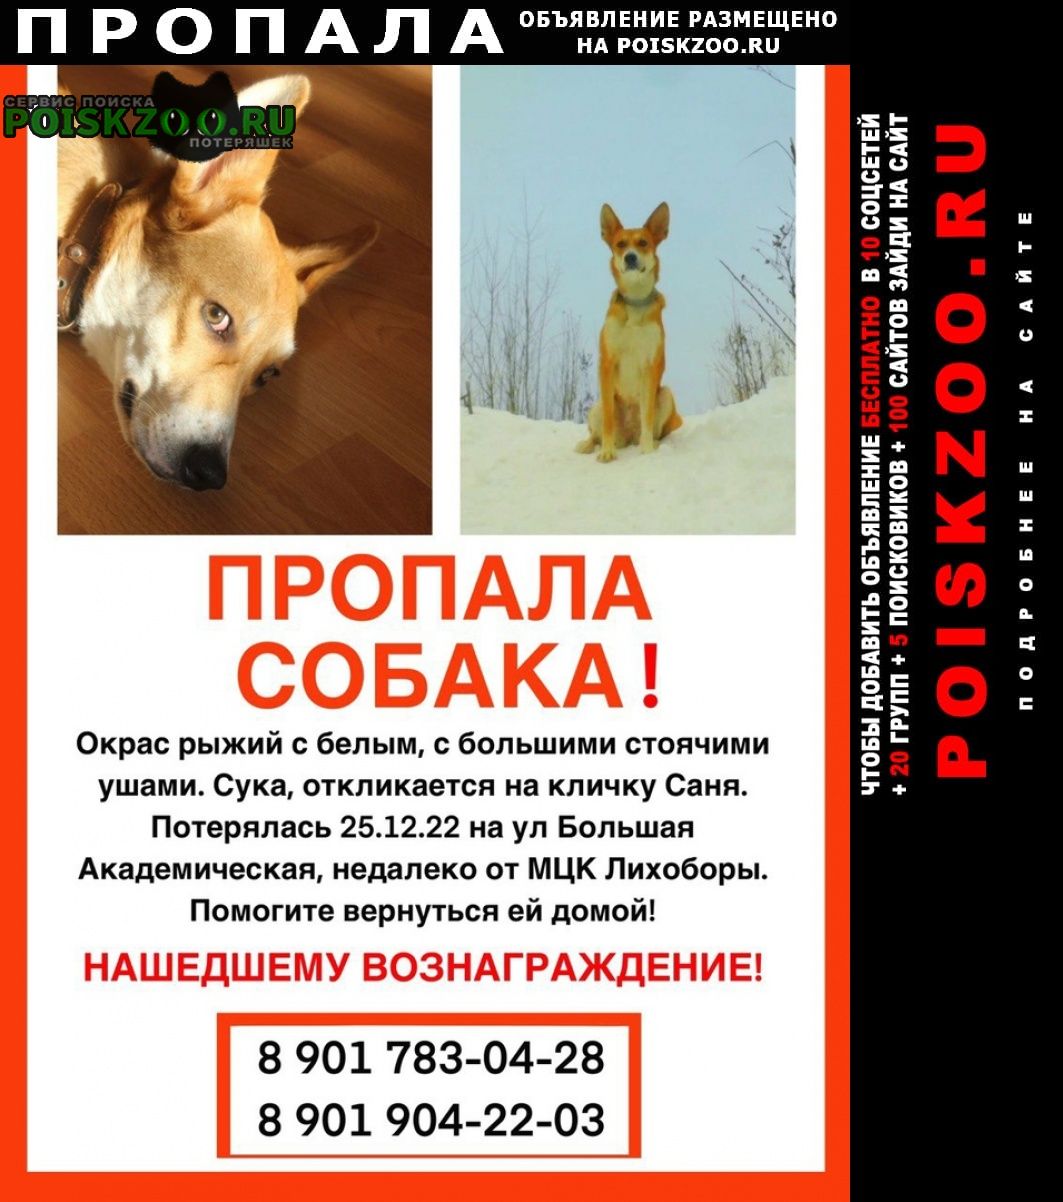 Пропала собака, рыжая, мцк лихоборы Москва